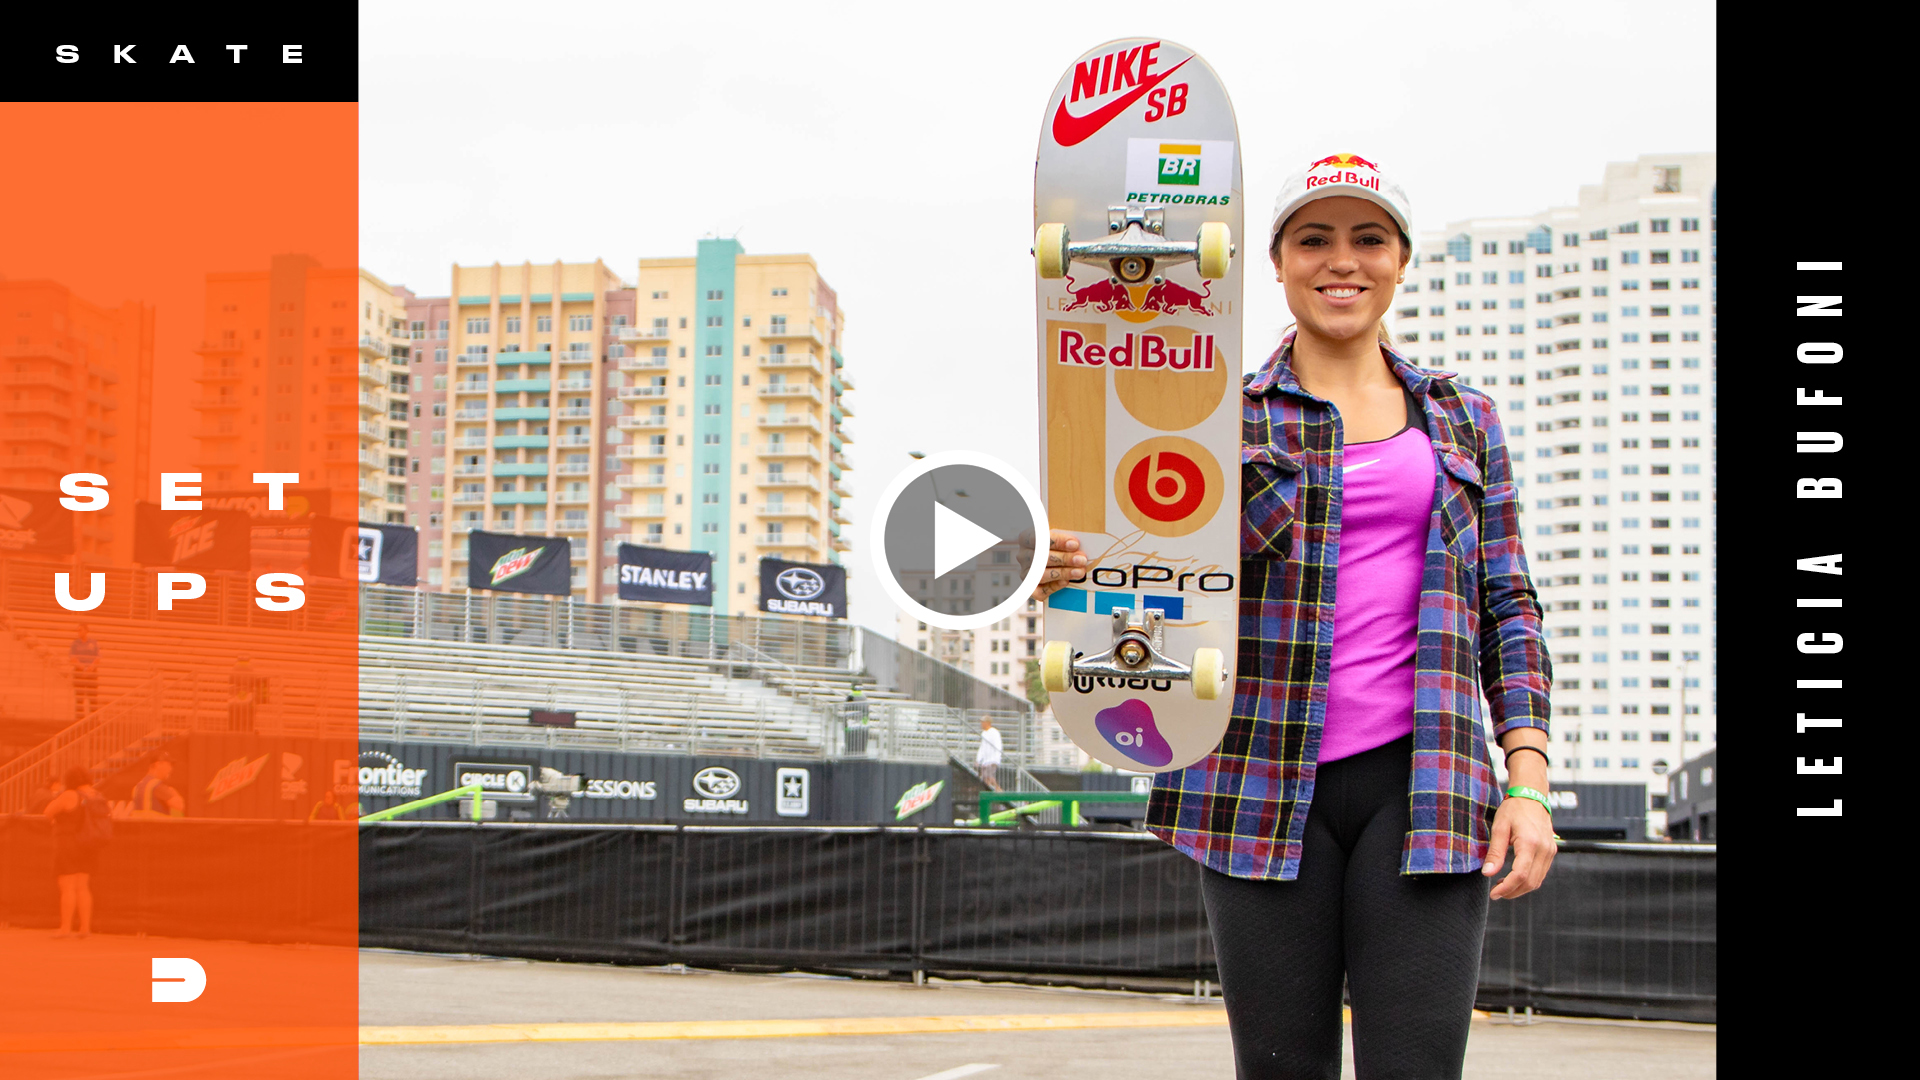 Leticia Bufoni's Skate Gear